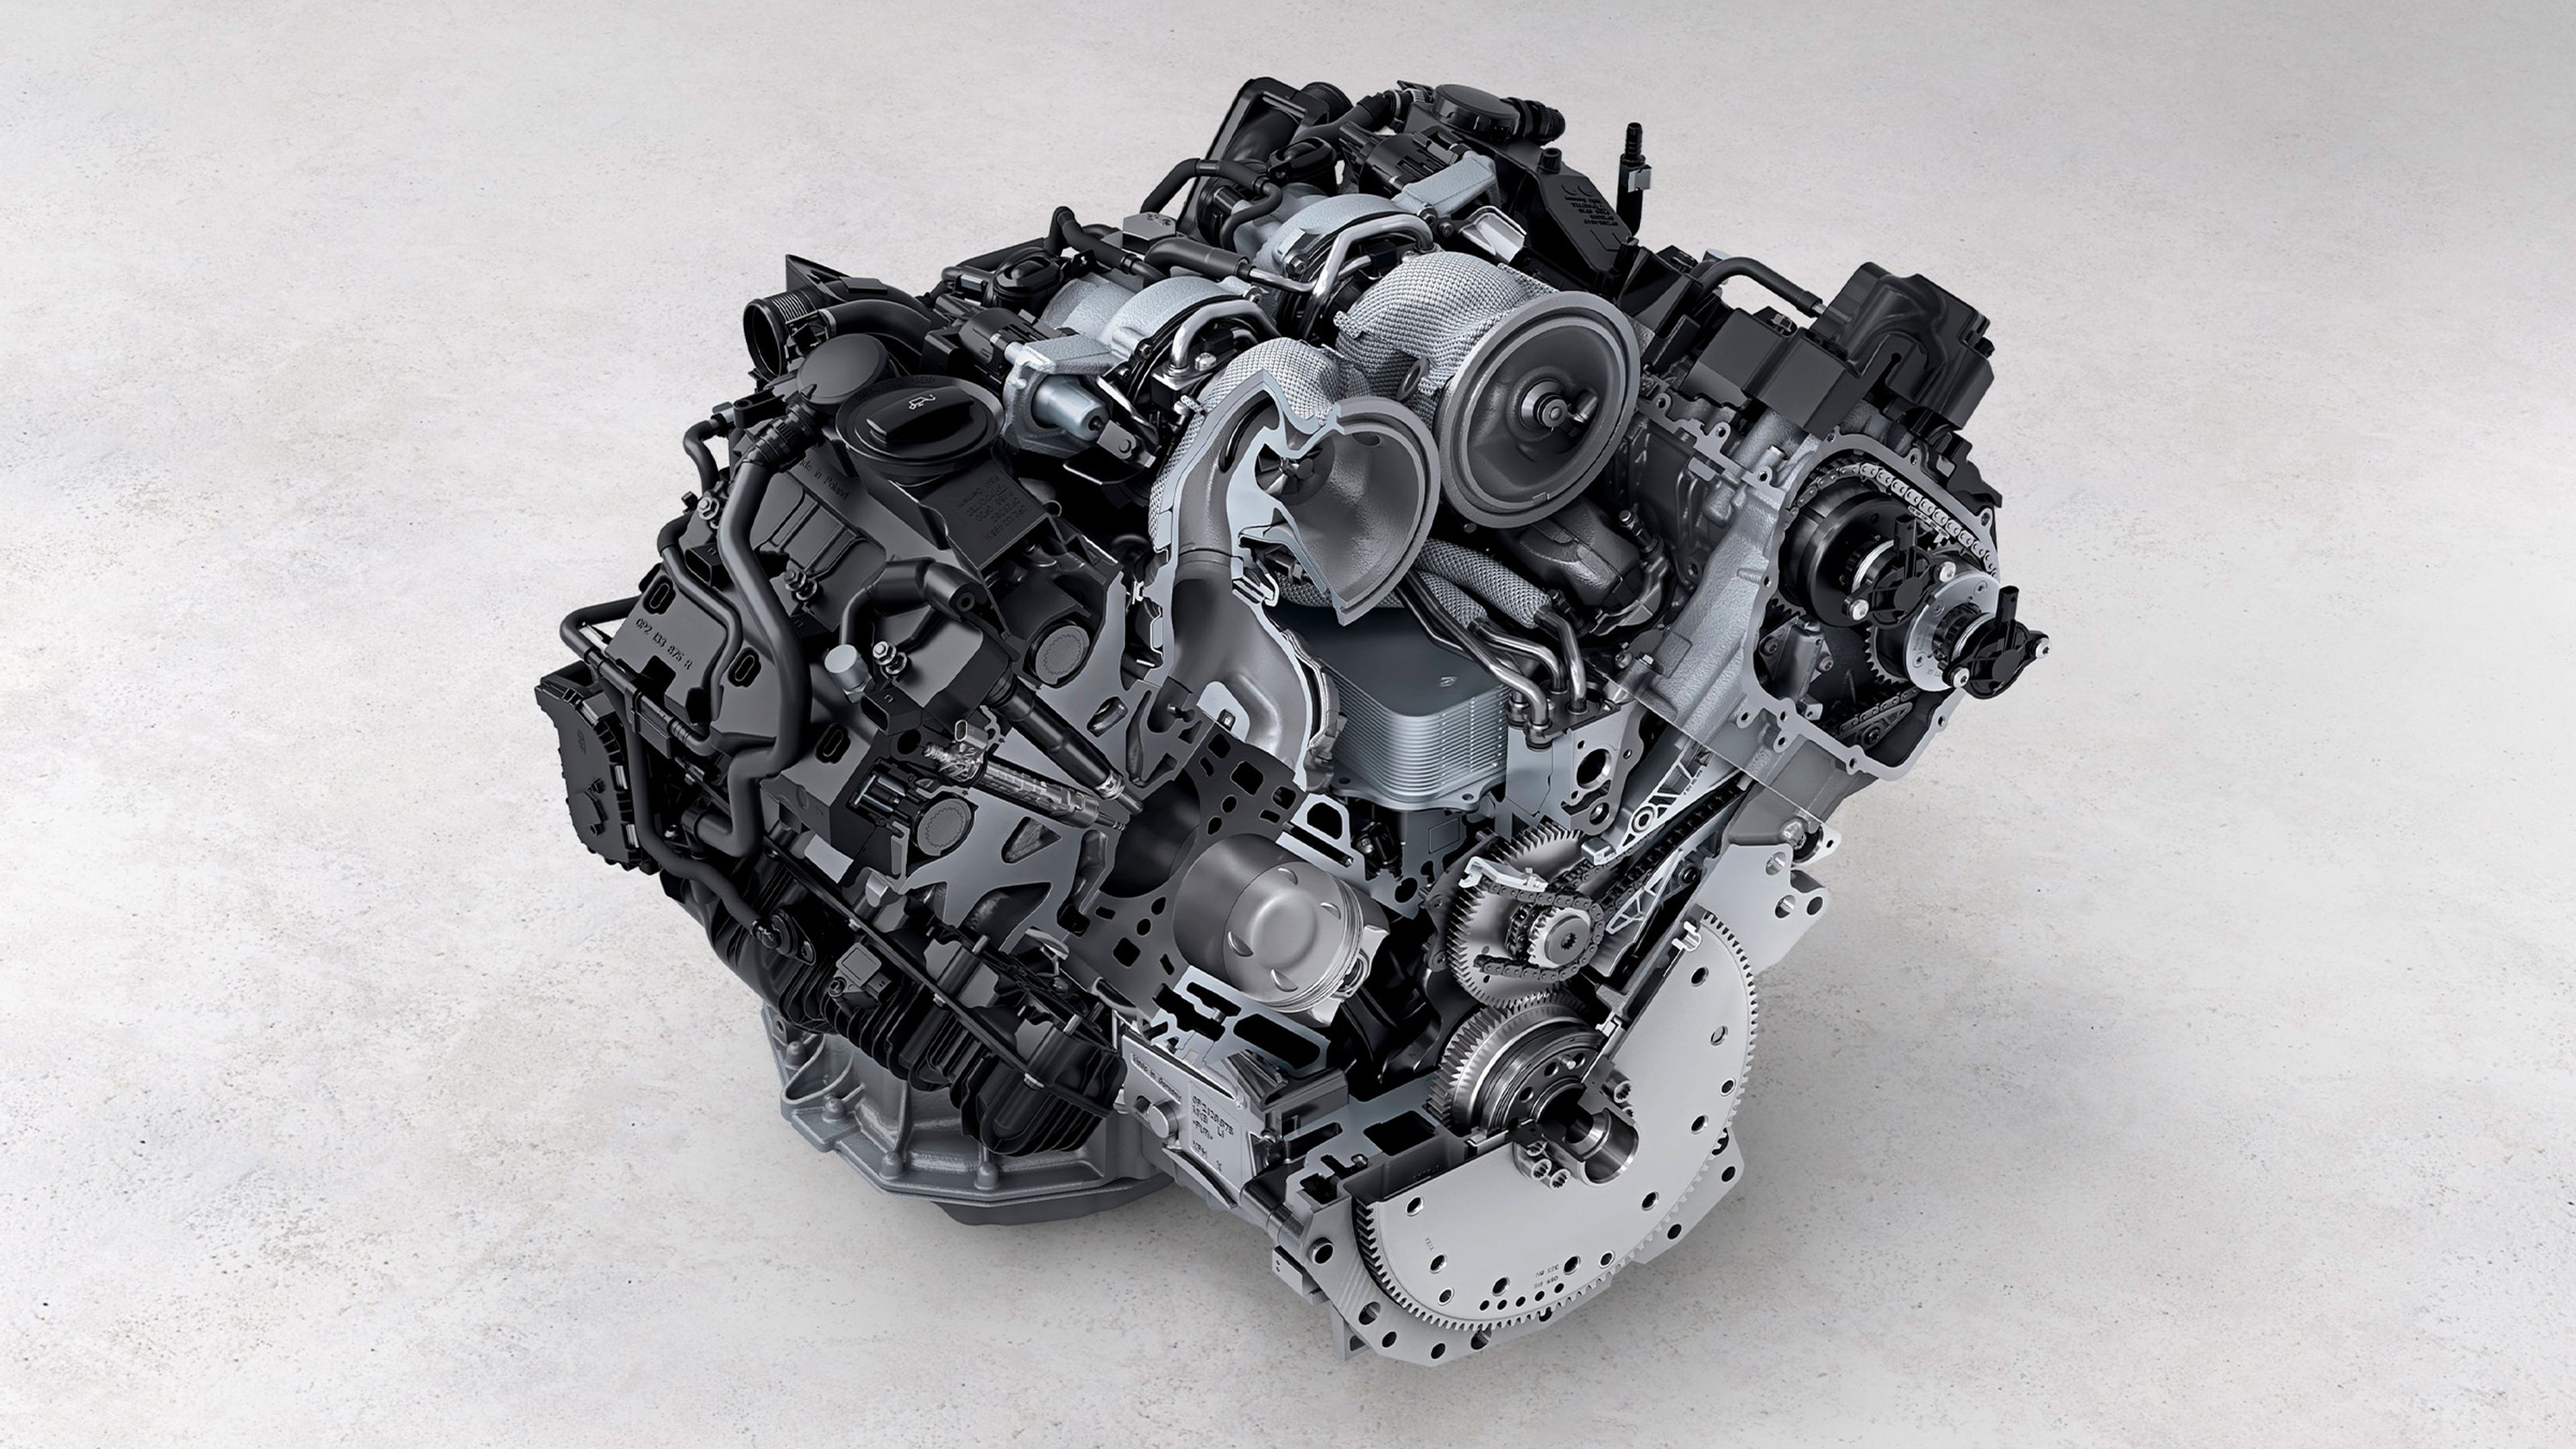 Motor V8 4.0 litros biturbo en V caliente del Porsche Cayenne